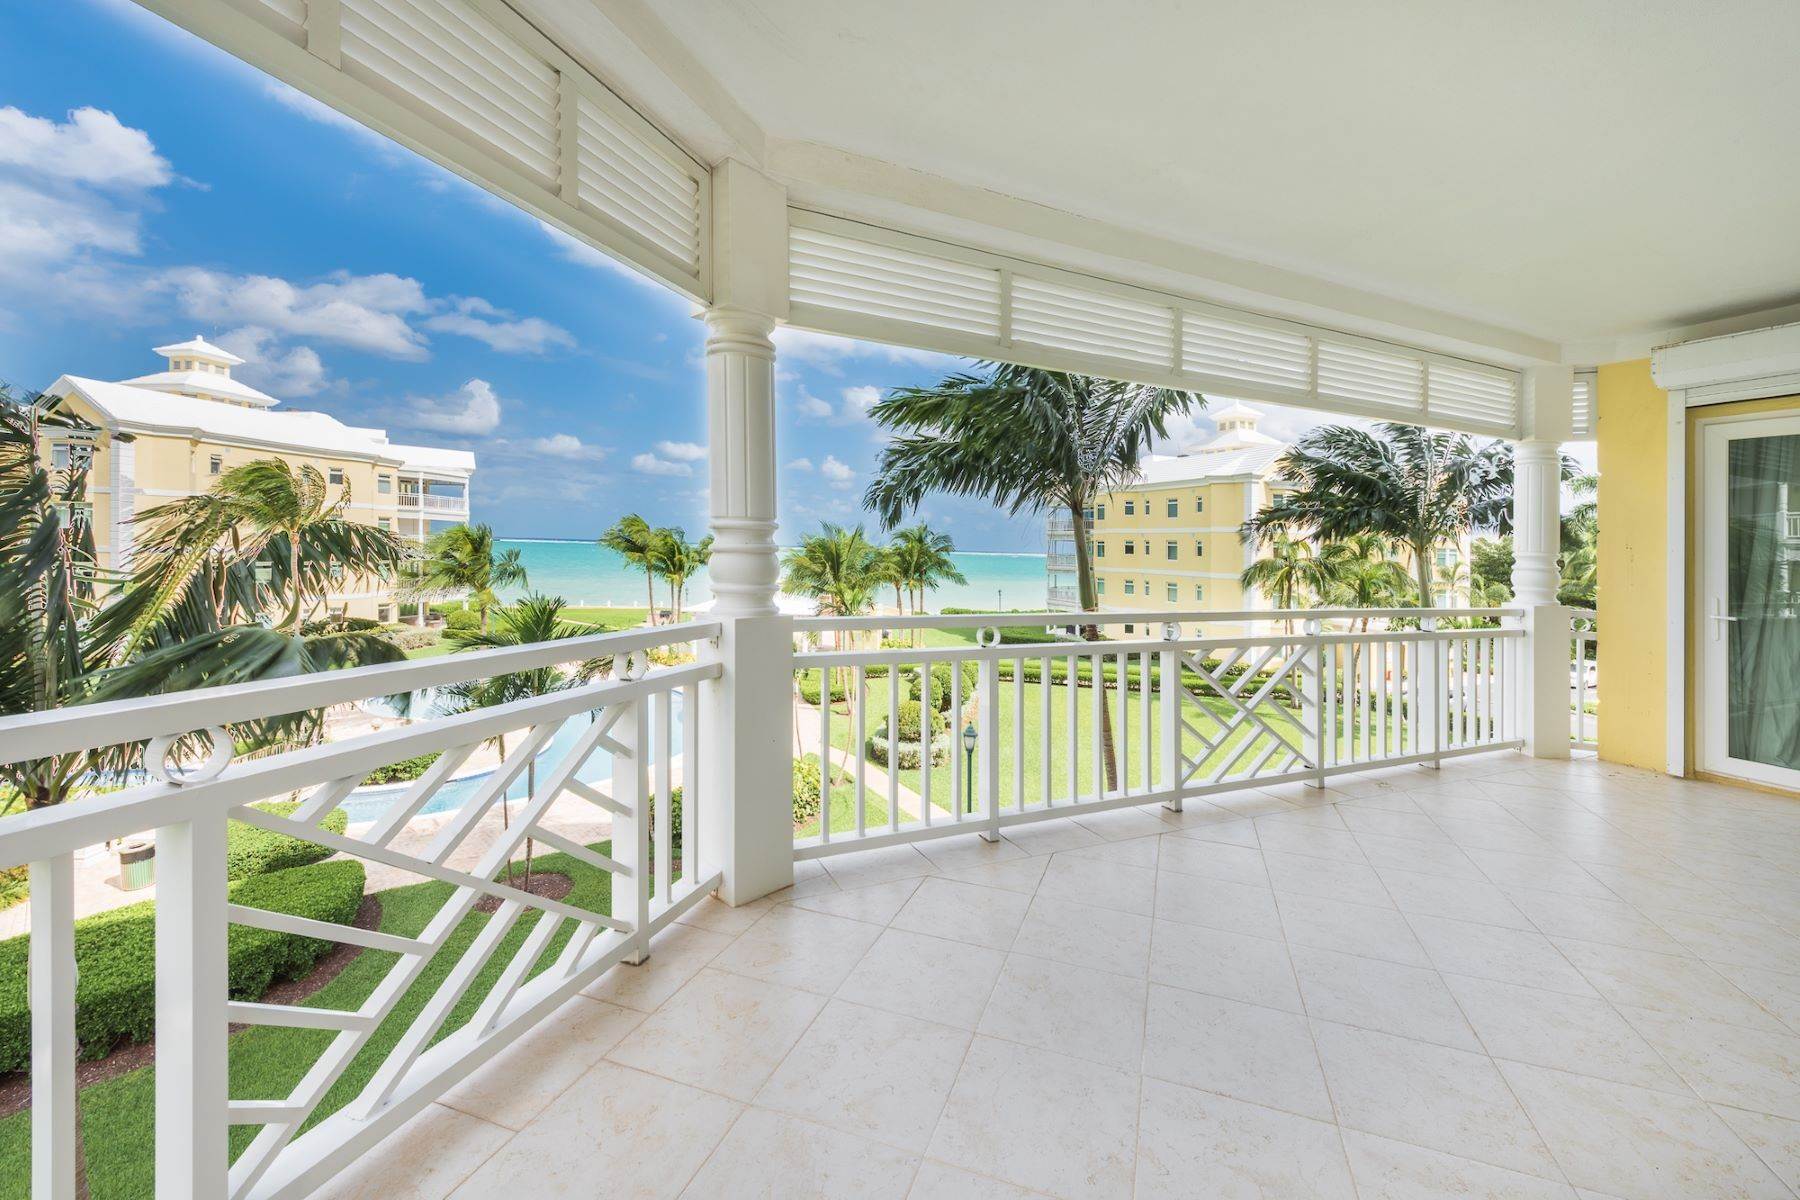 Condominiums for Sale at Bayroc, Roc Tower Bayroc, Cable Beach, Nassau and Paradise Island, Bahamas